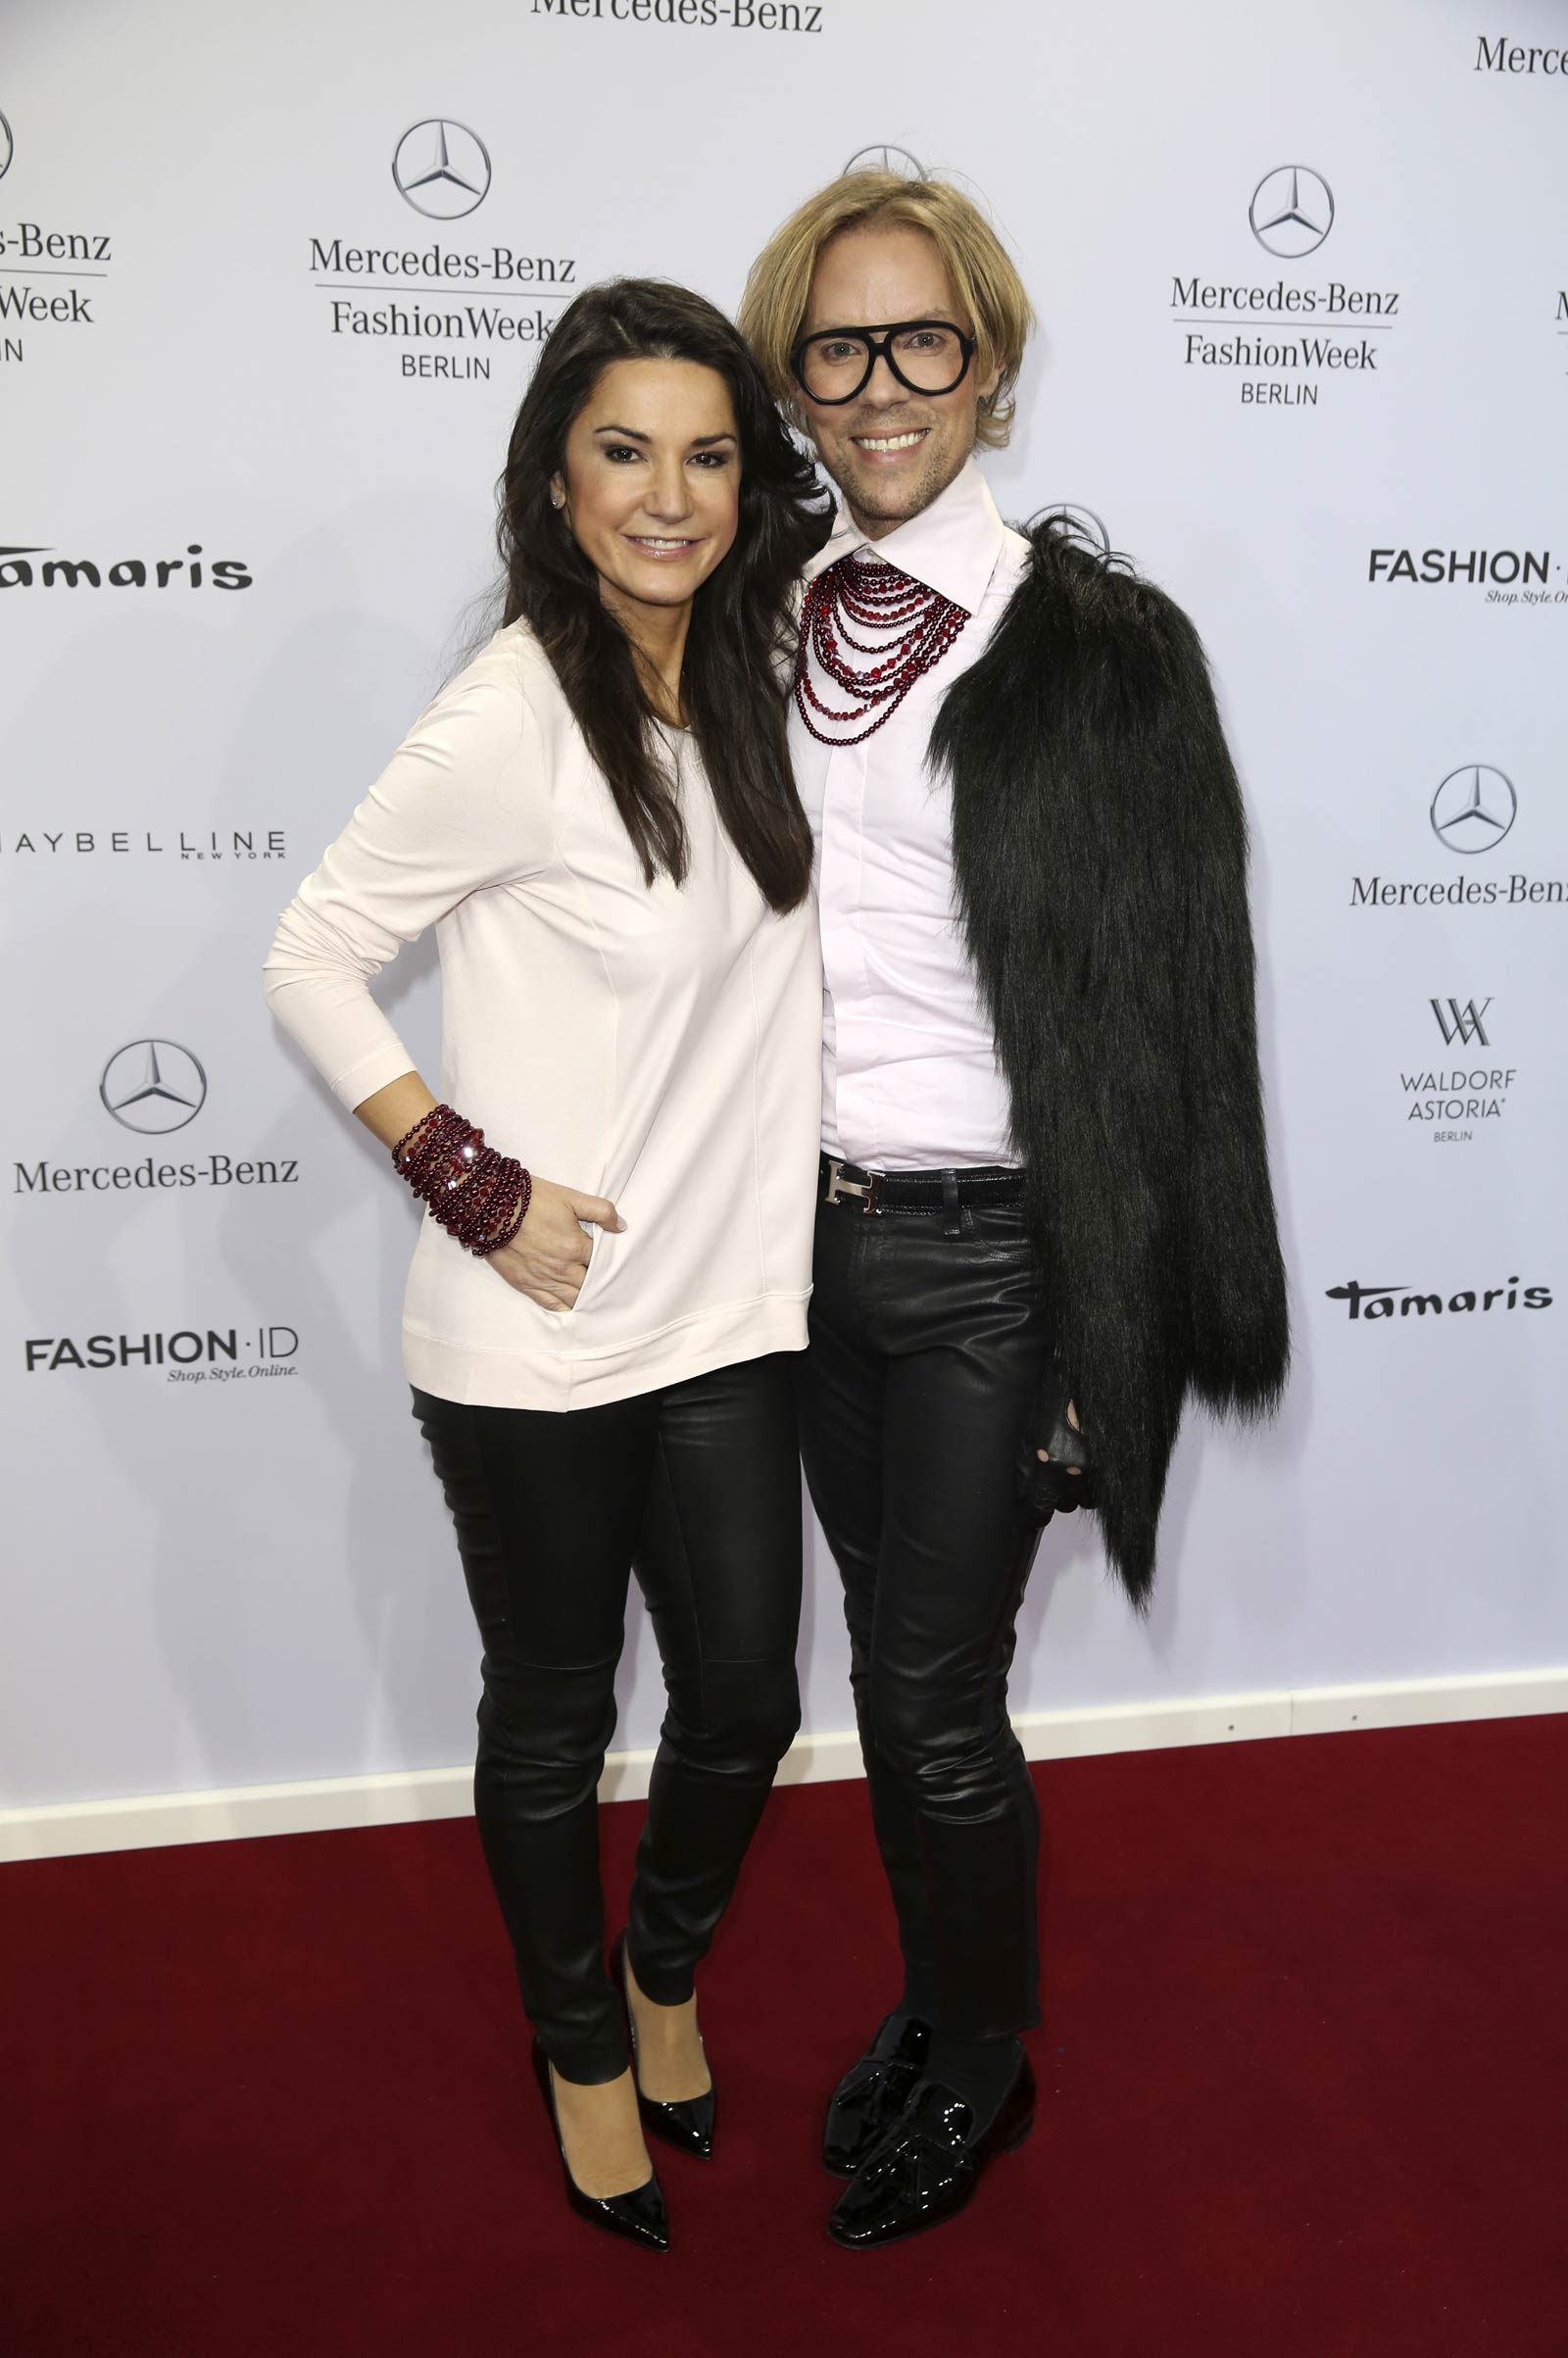 Mariella Ahrens attends Mercedes-Benz Fashion Week